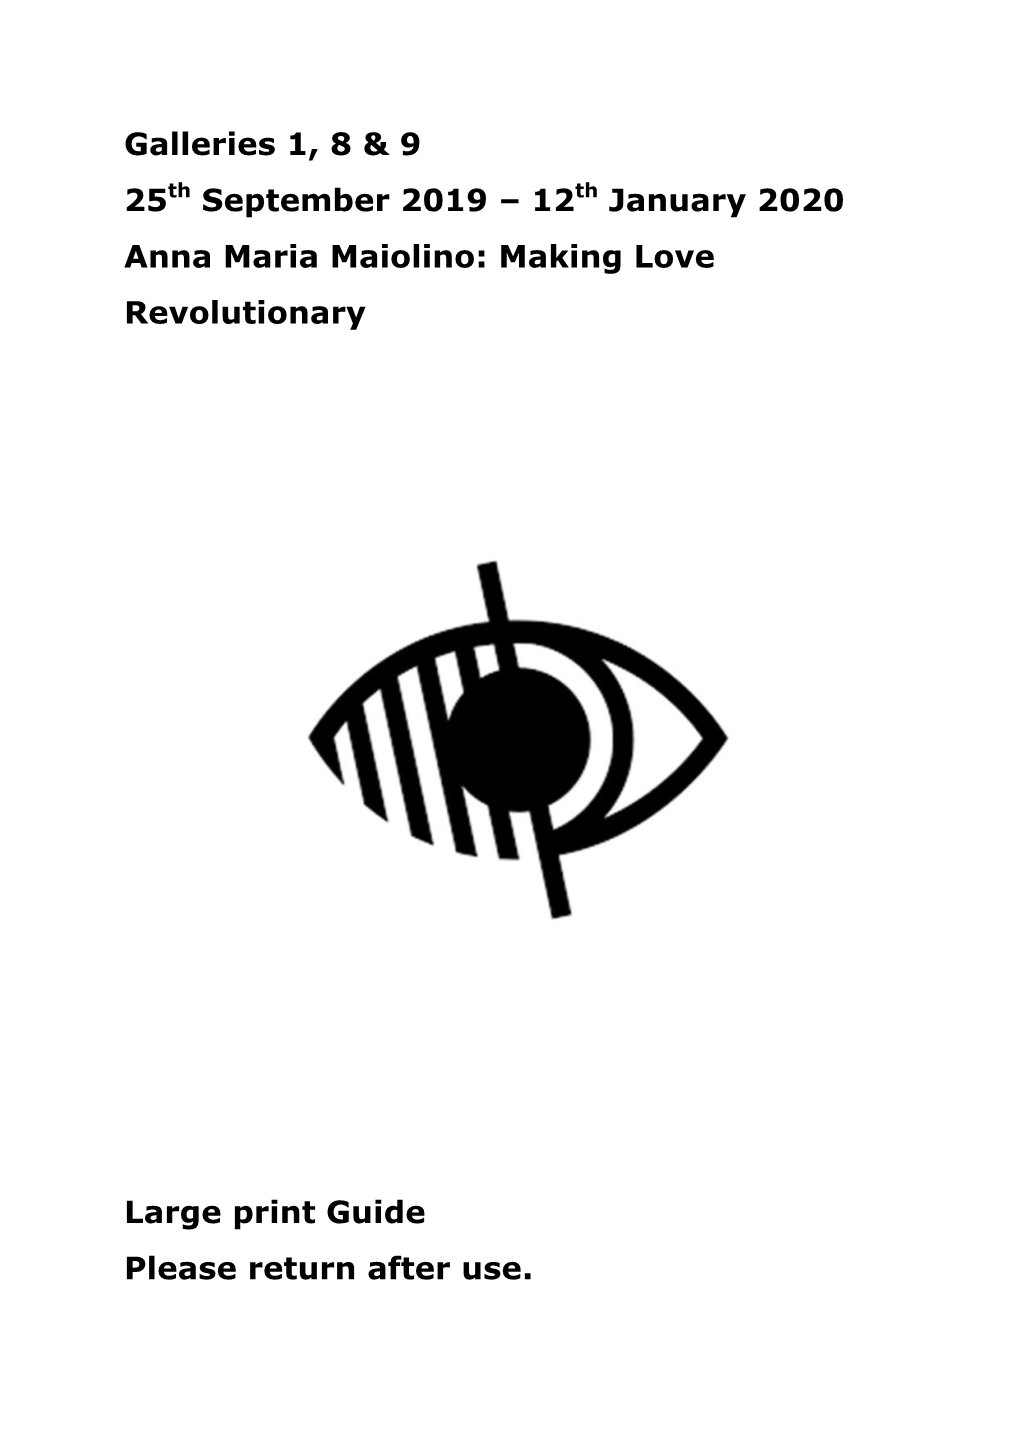 Anna Maria Maiolino: Making Love Revolutionary